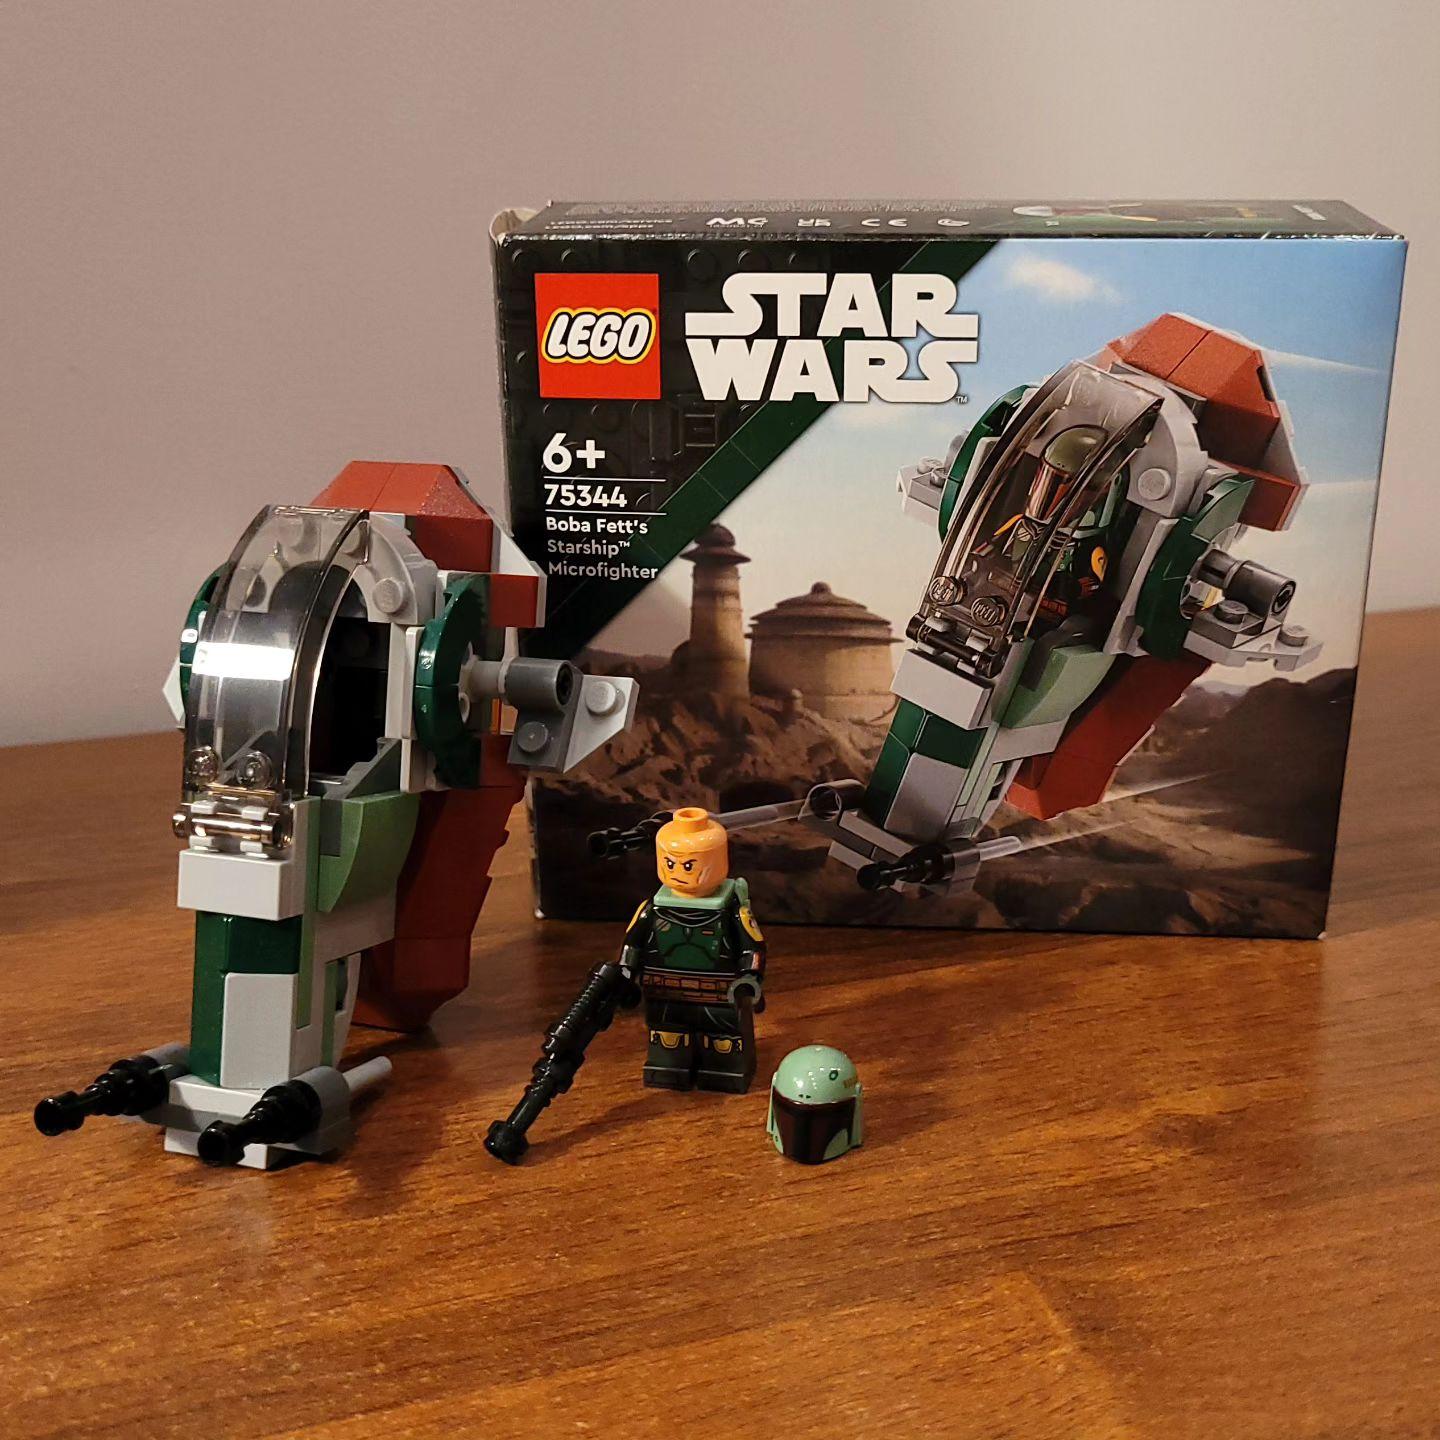 LEGO Star Wars Boba Fett\'s Starship Microfighter 75344 | Mr Toys